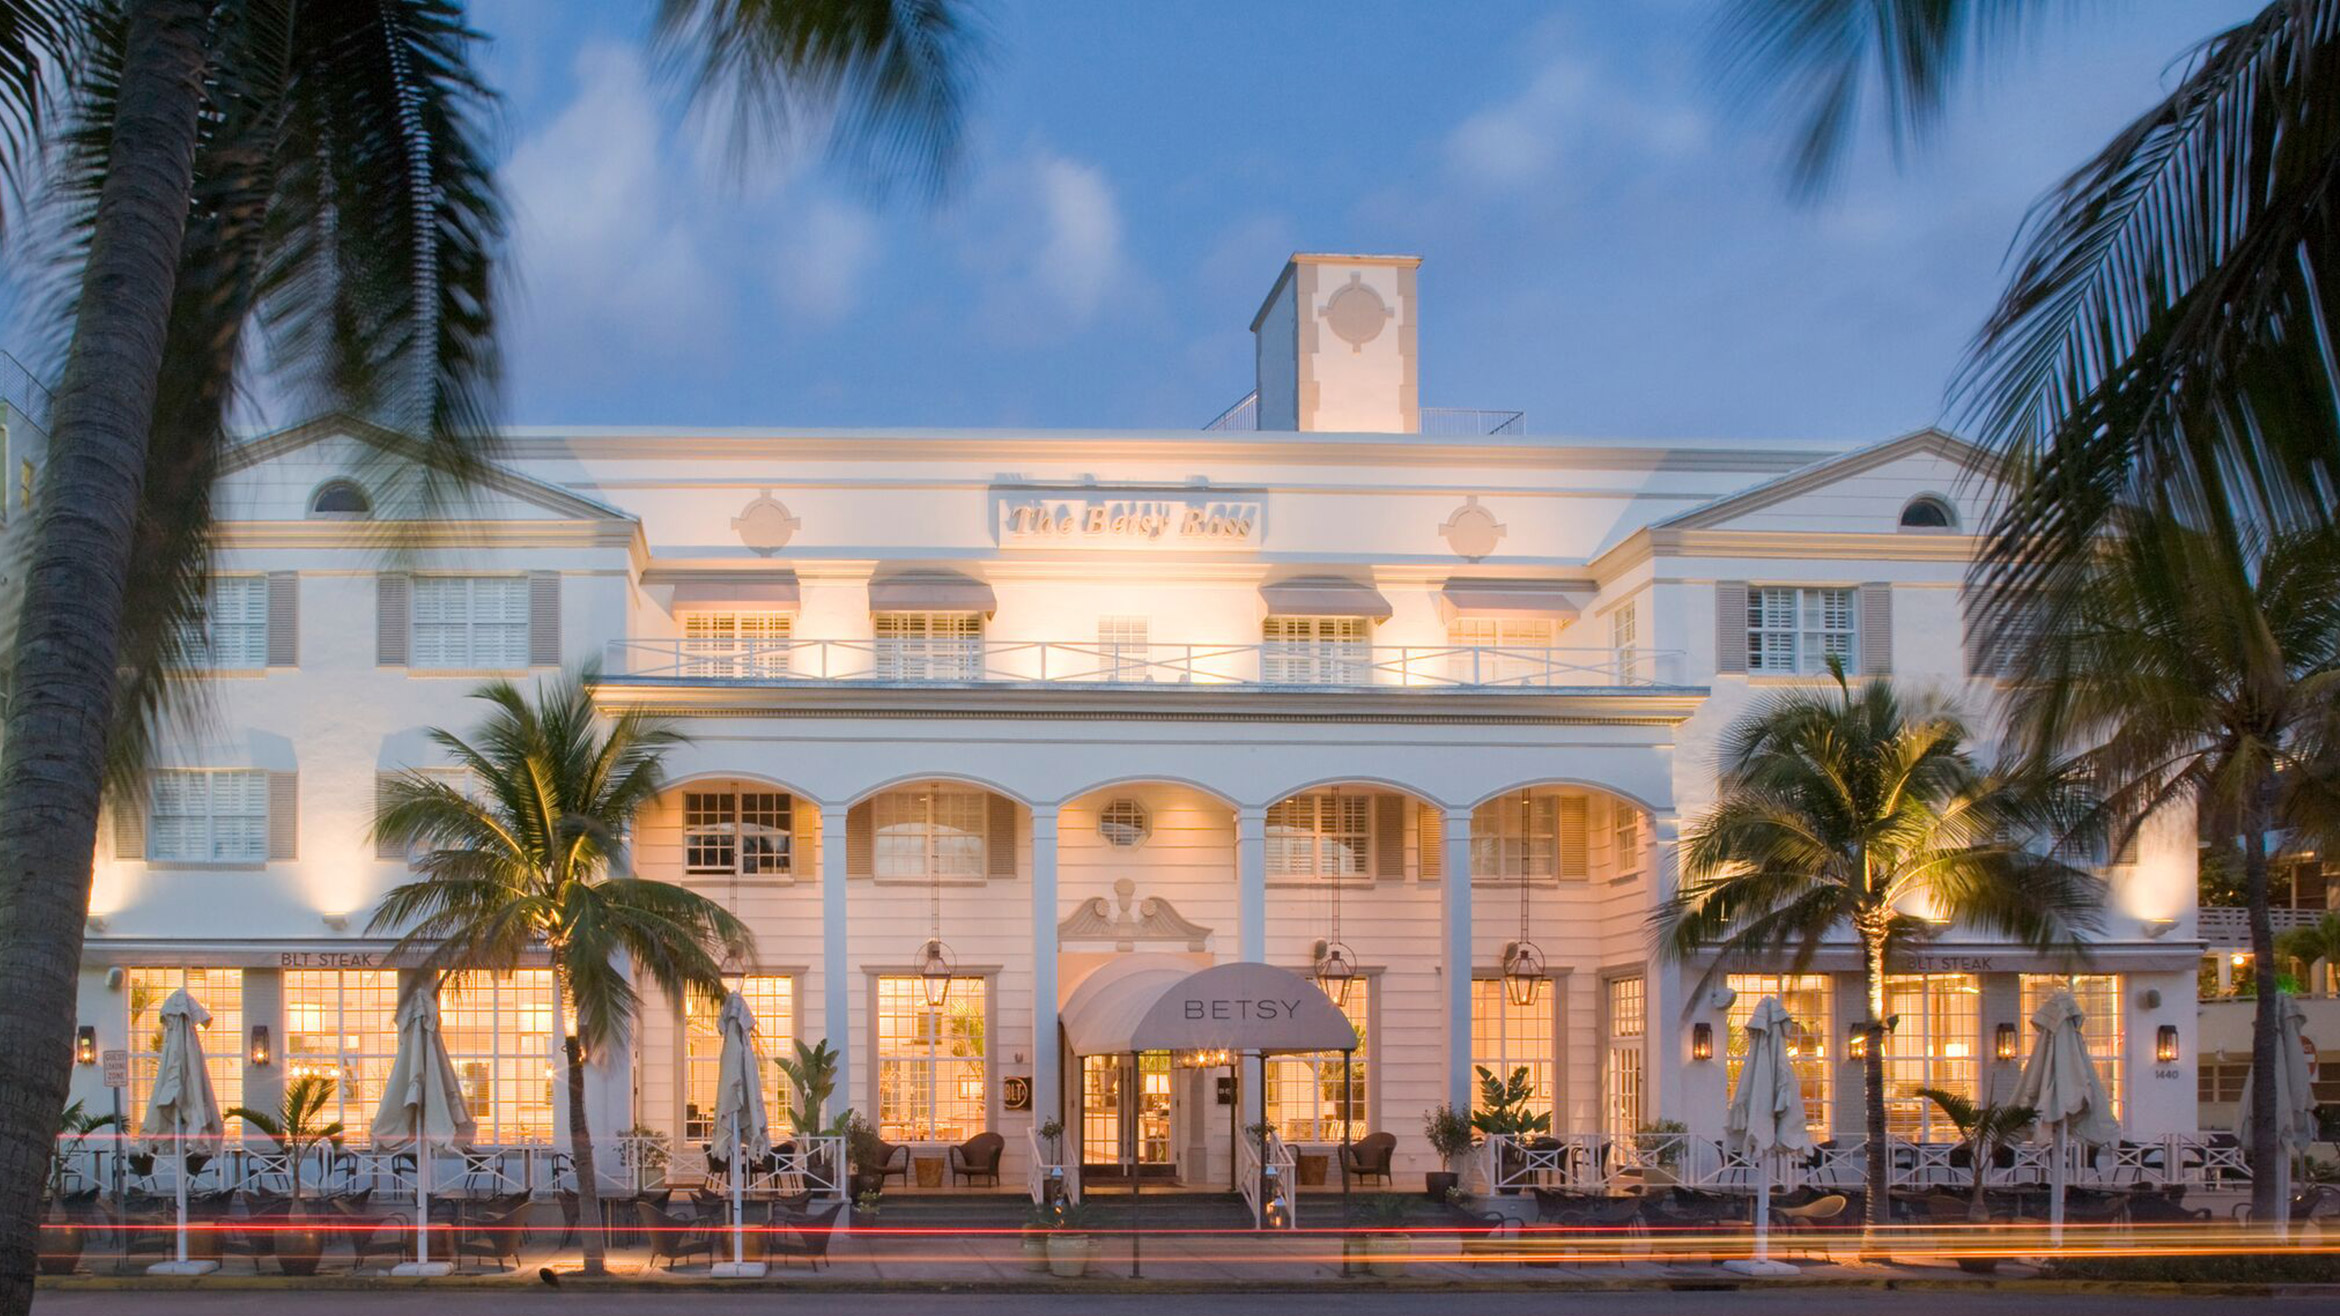 The Betsy Hotel – South Beach